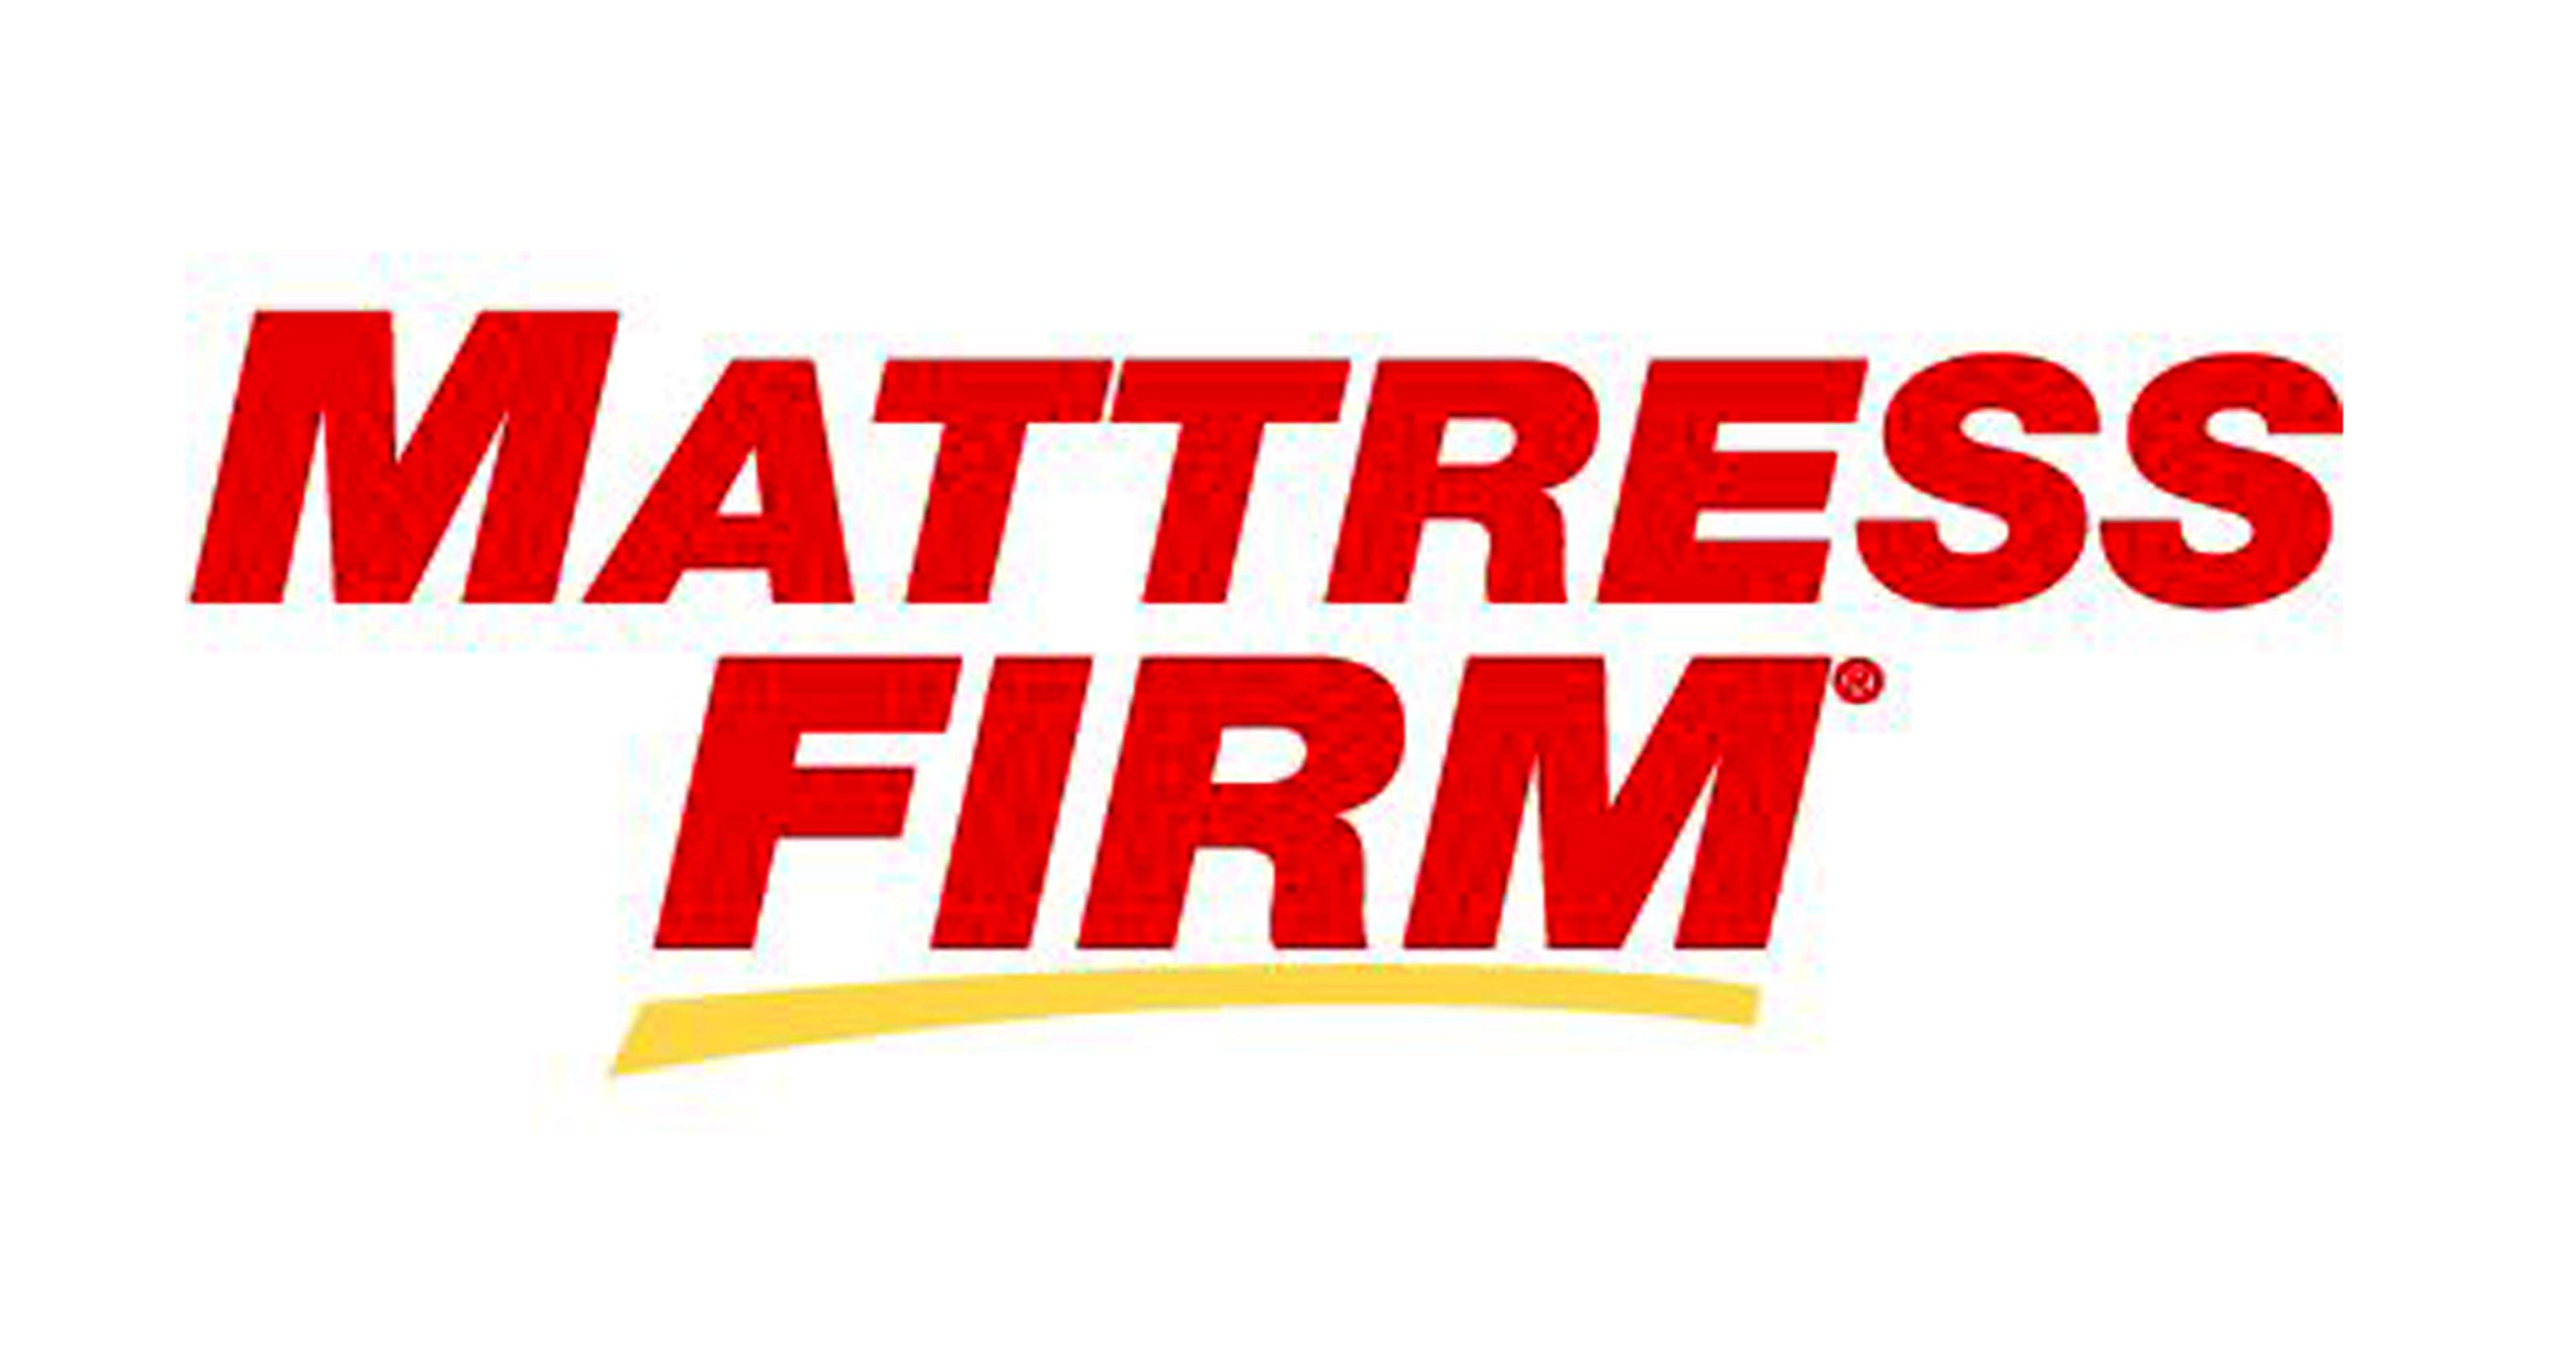 mattress firm stores in michigan